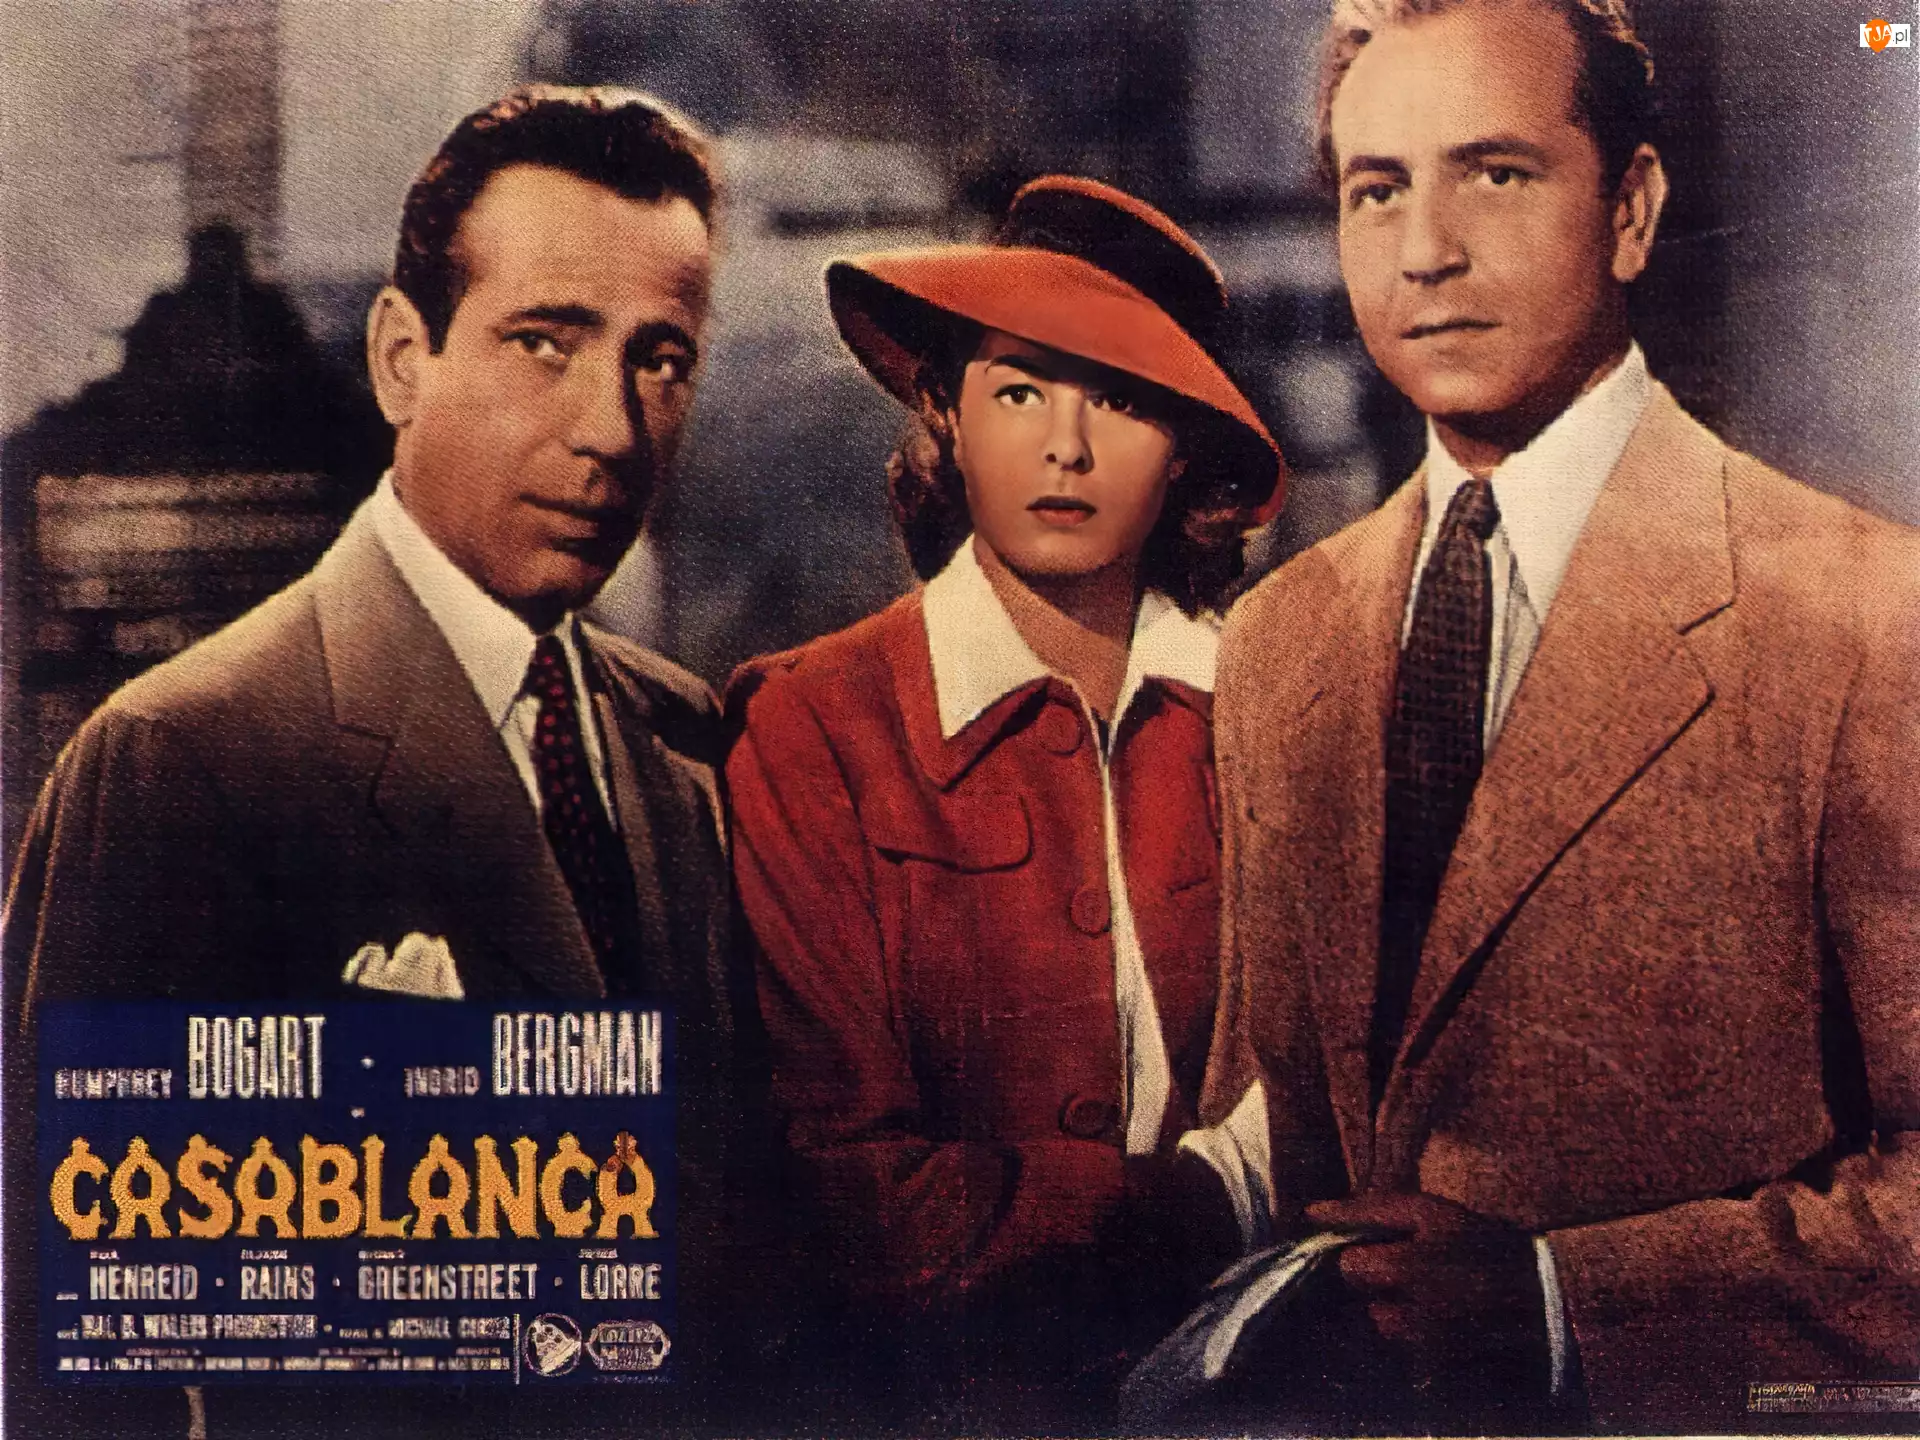 Humphrey Bogart, Casablanca, Paul Henreid, Ingrid Bergman